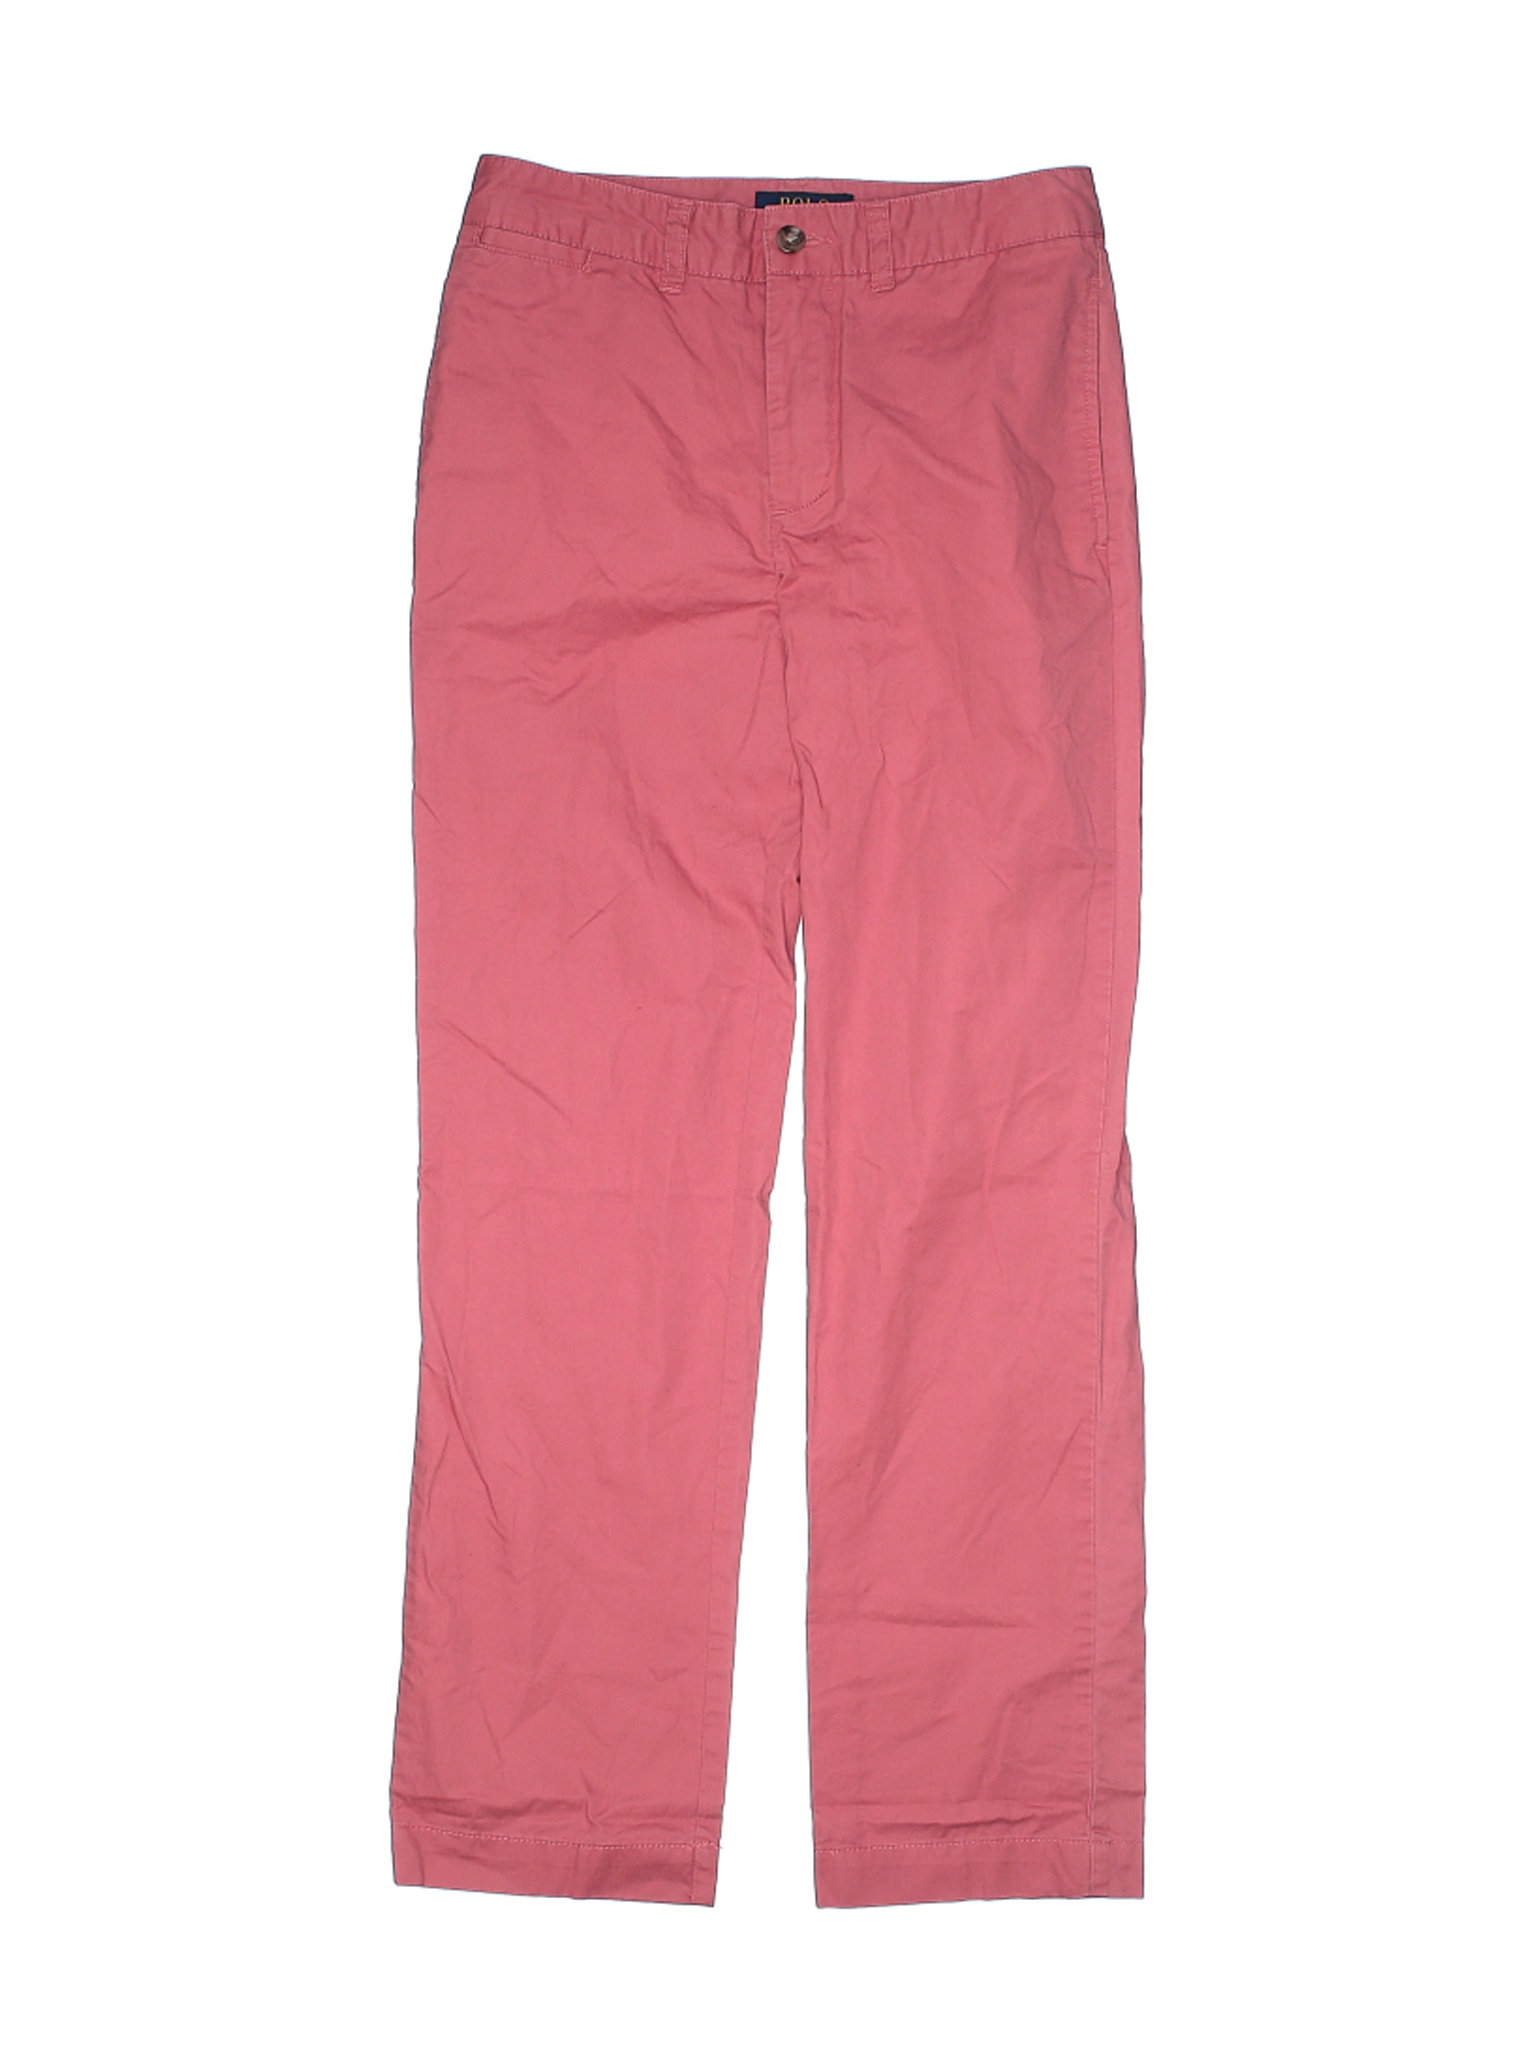 Polo by Ralph Lauren Boys Pink Khakis 12 | eBay